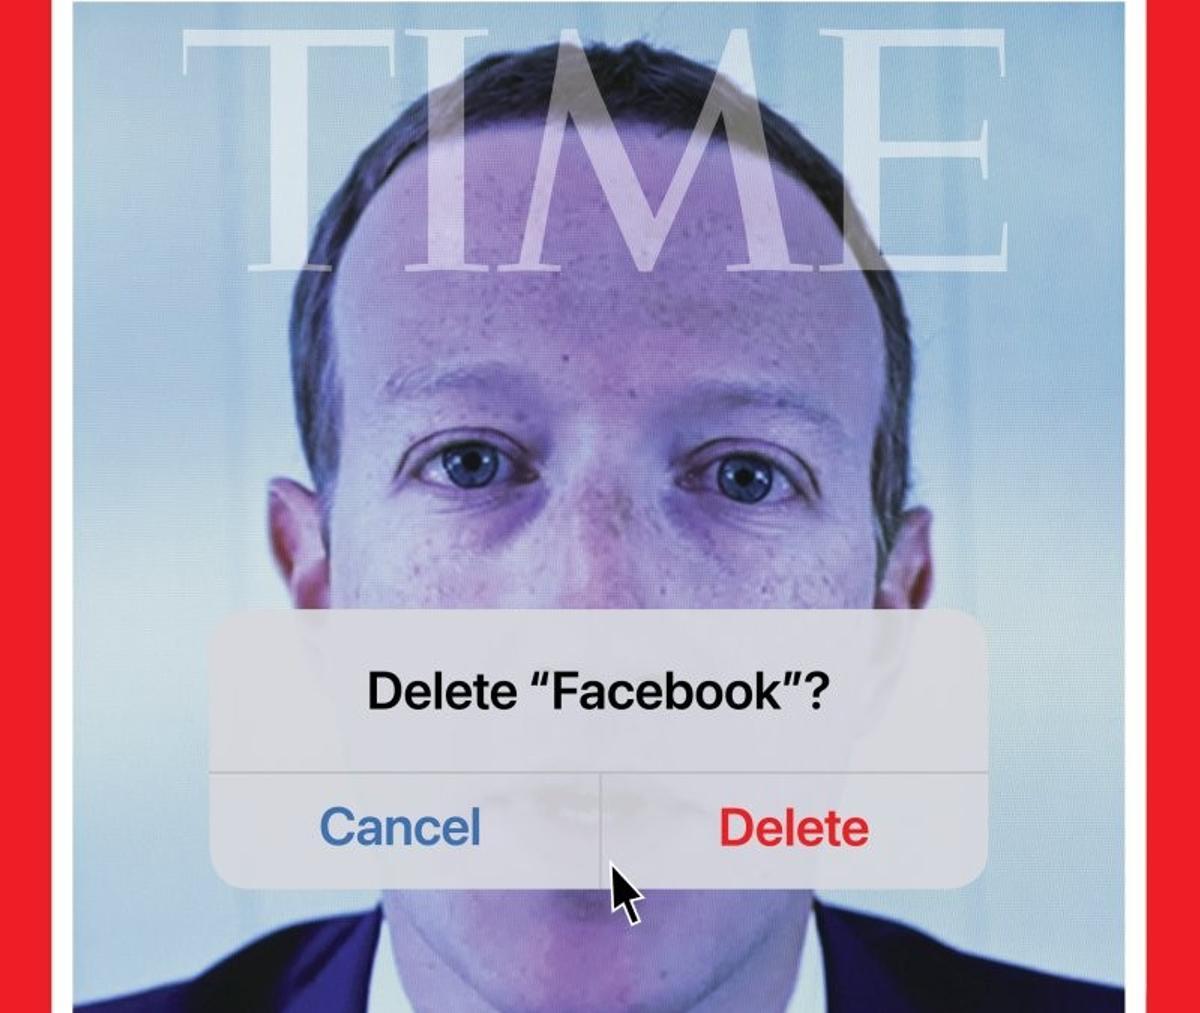 La portada de &#39;Time&#39;: ¿borrar Facebook?